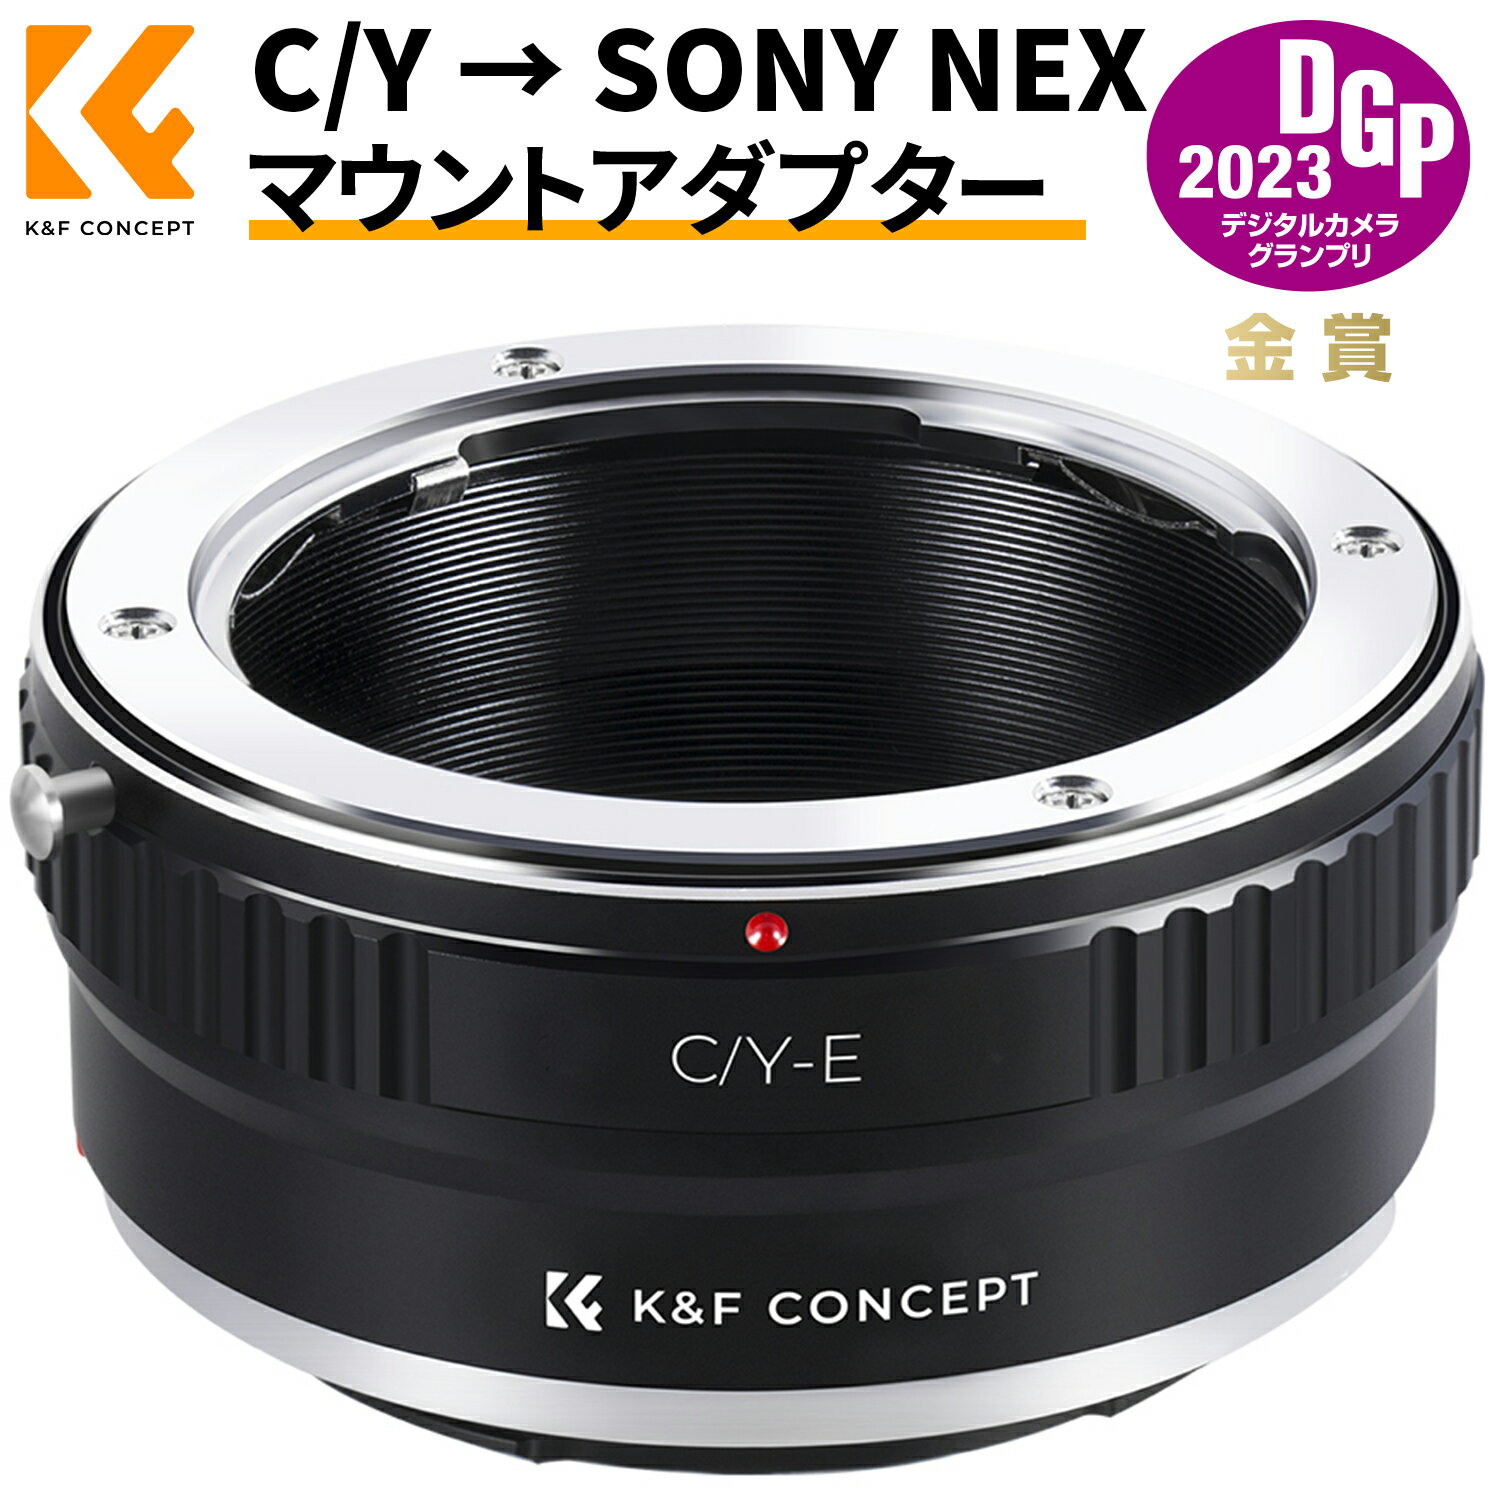 K&F Concept マウントアダプター C/Y-NEX コンタックスヤシカC/Yマウントレンズ- SONY (α NEX) Eマウントカメラ装着用レンズアダプター eマウントアダプター